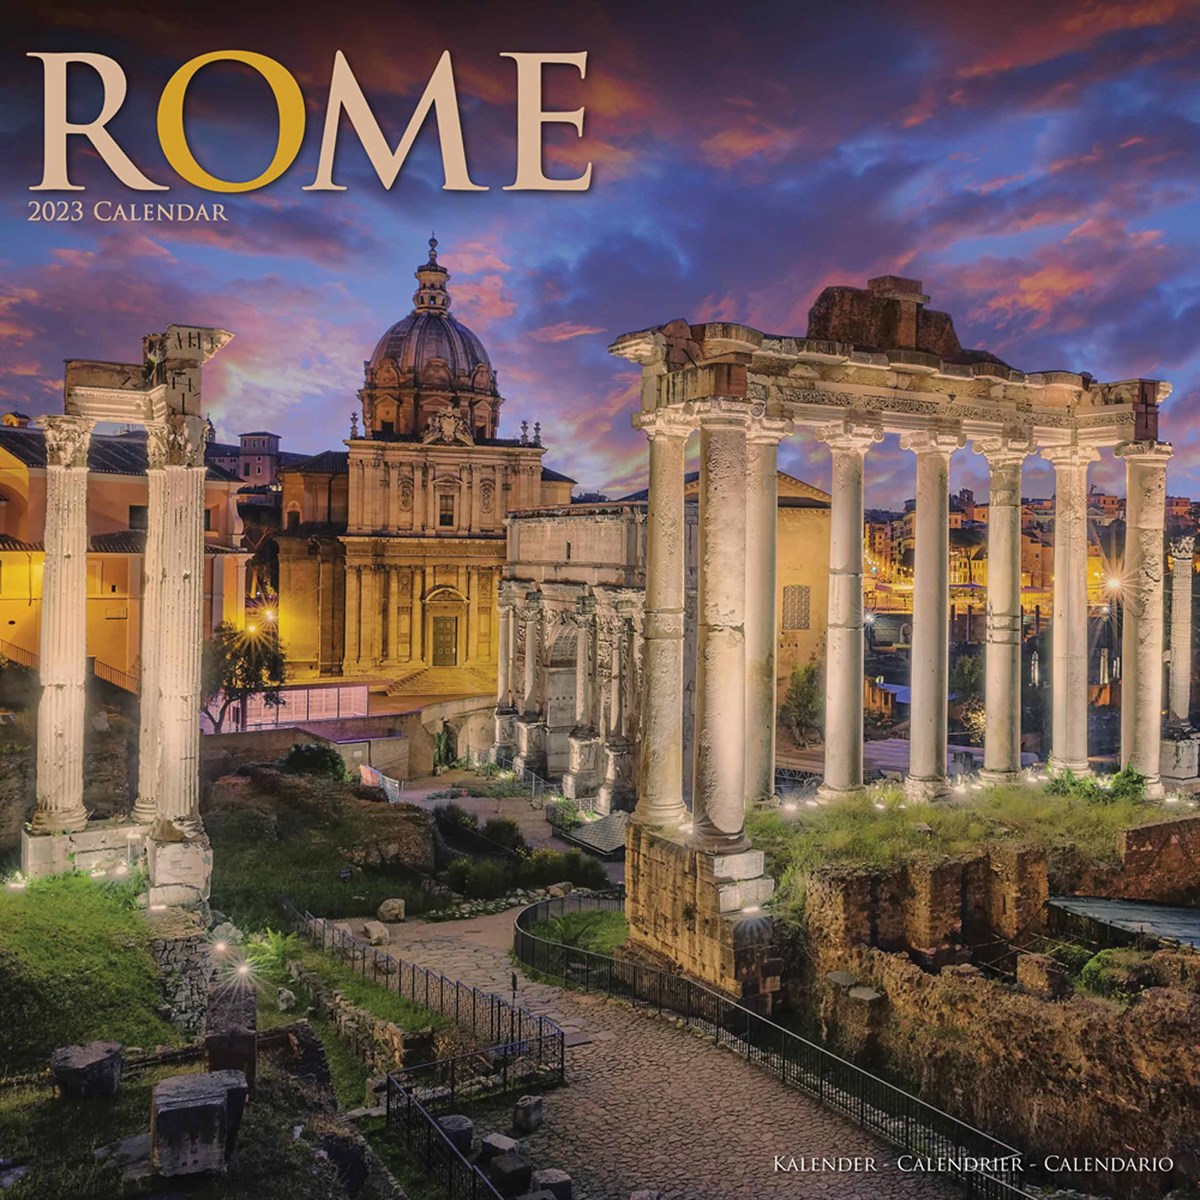 Rome 2023 Calendars